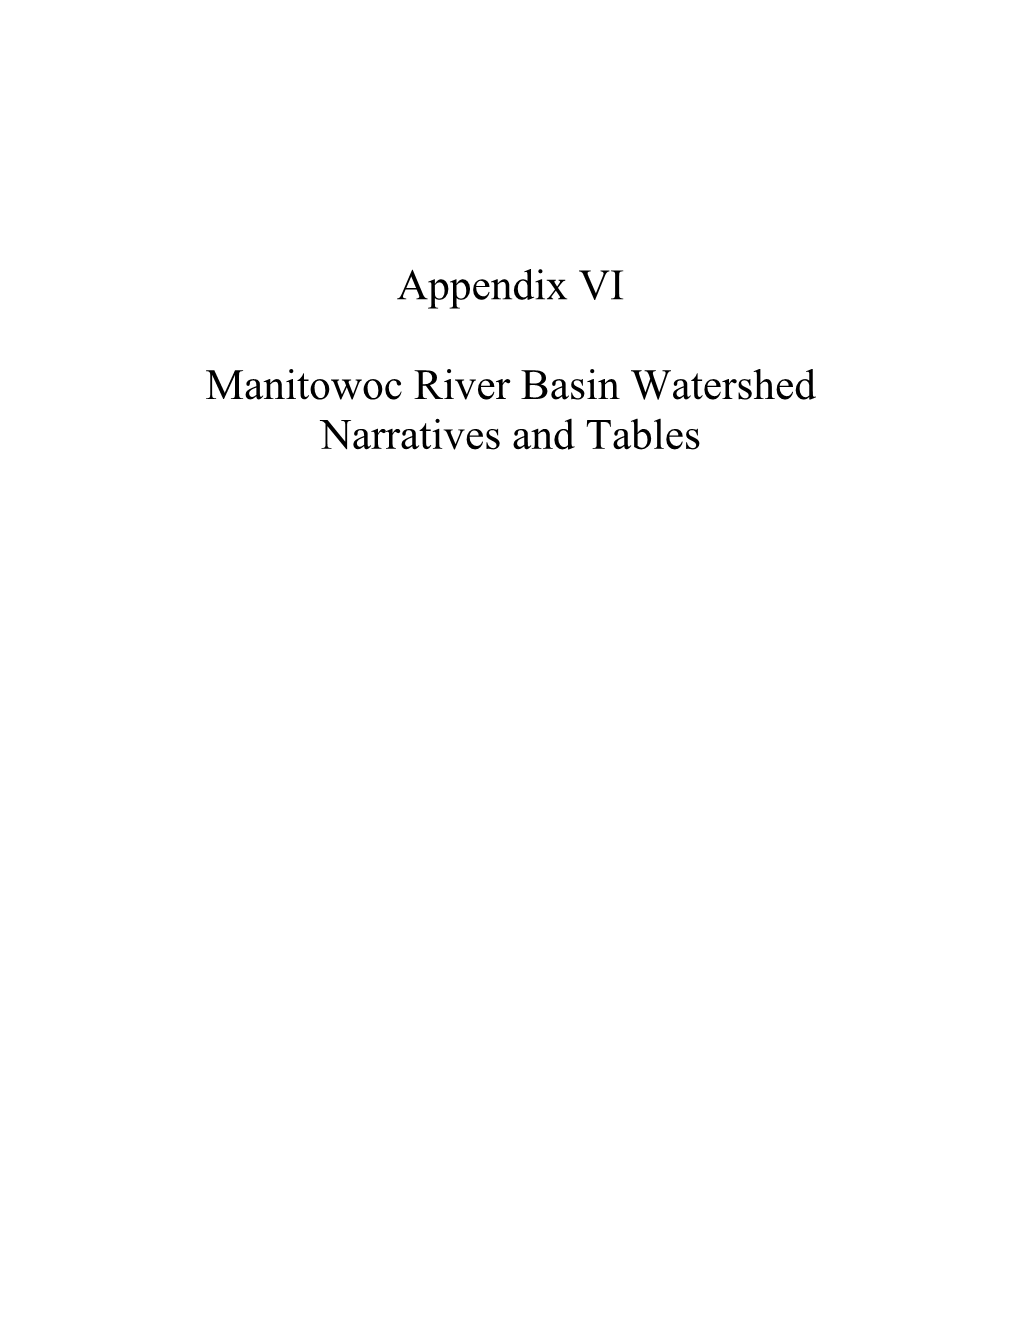 Appendix VI Manitowoc River Basin Watershed Narratives and Tables